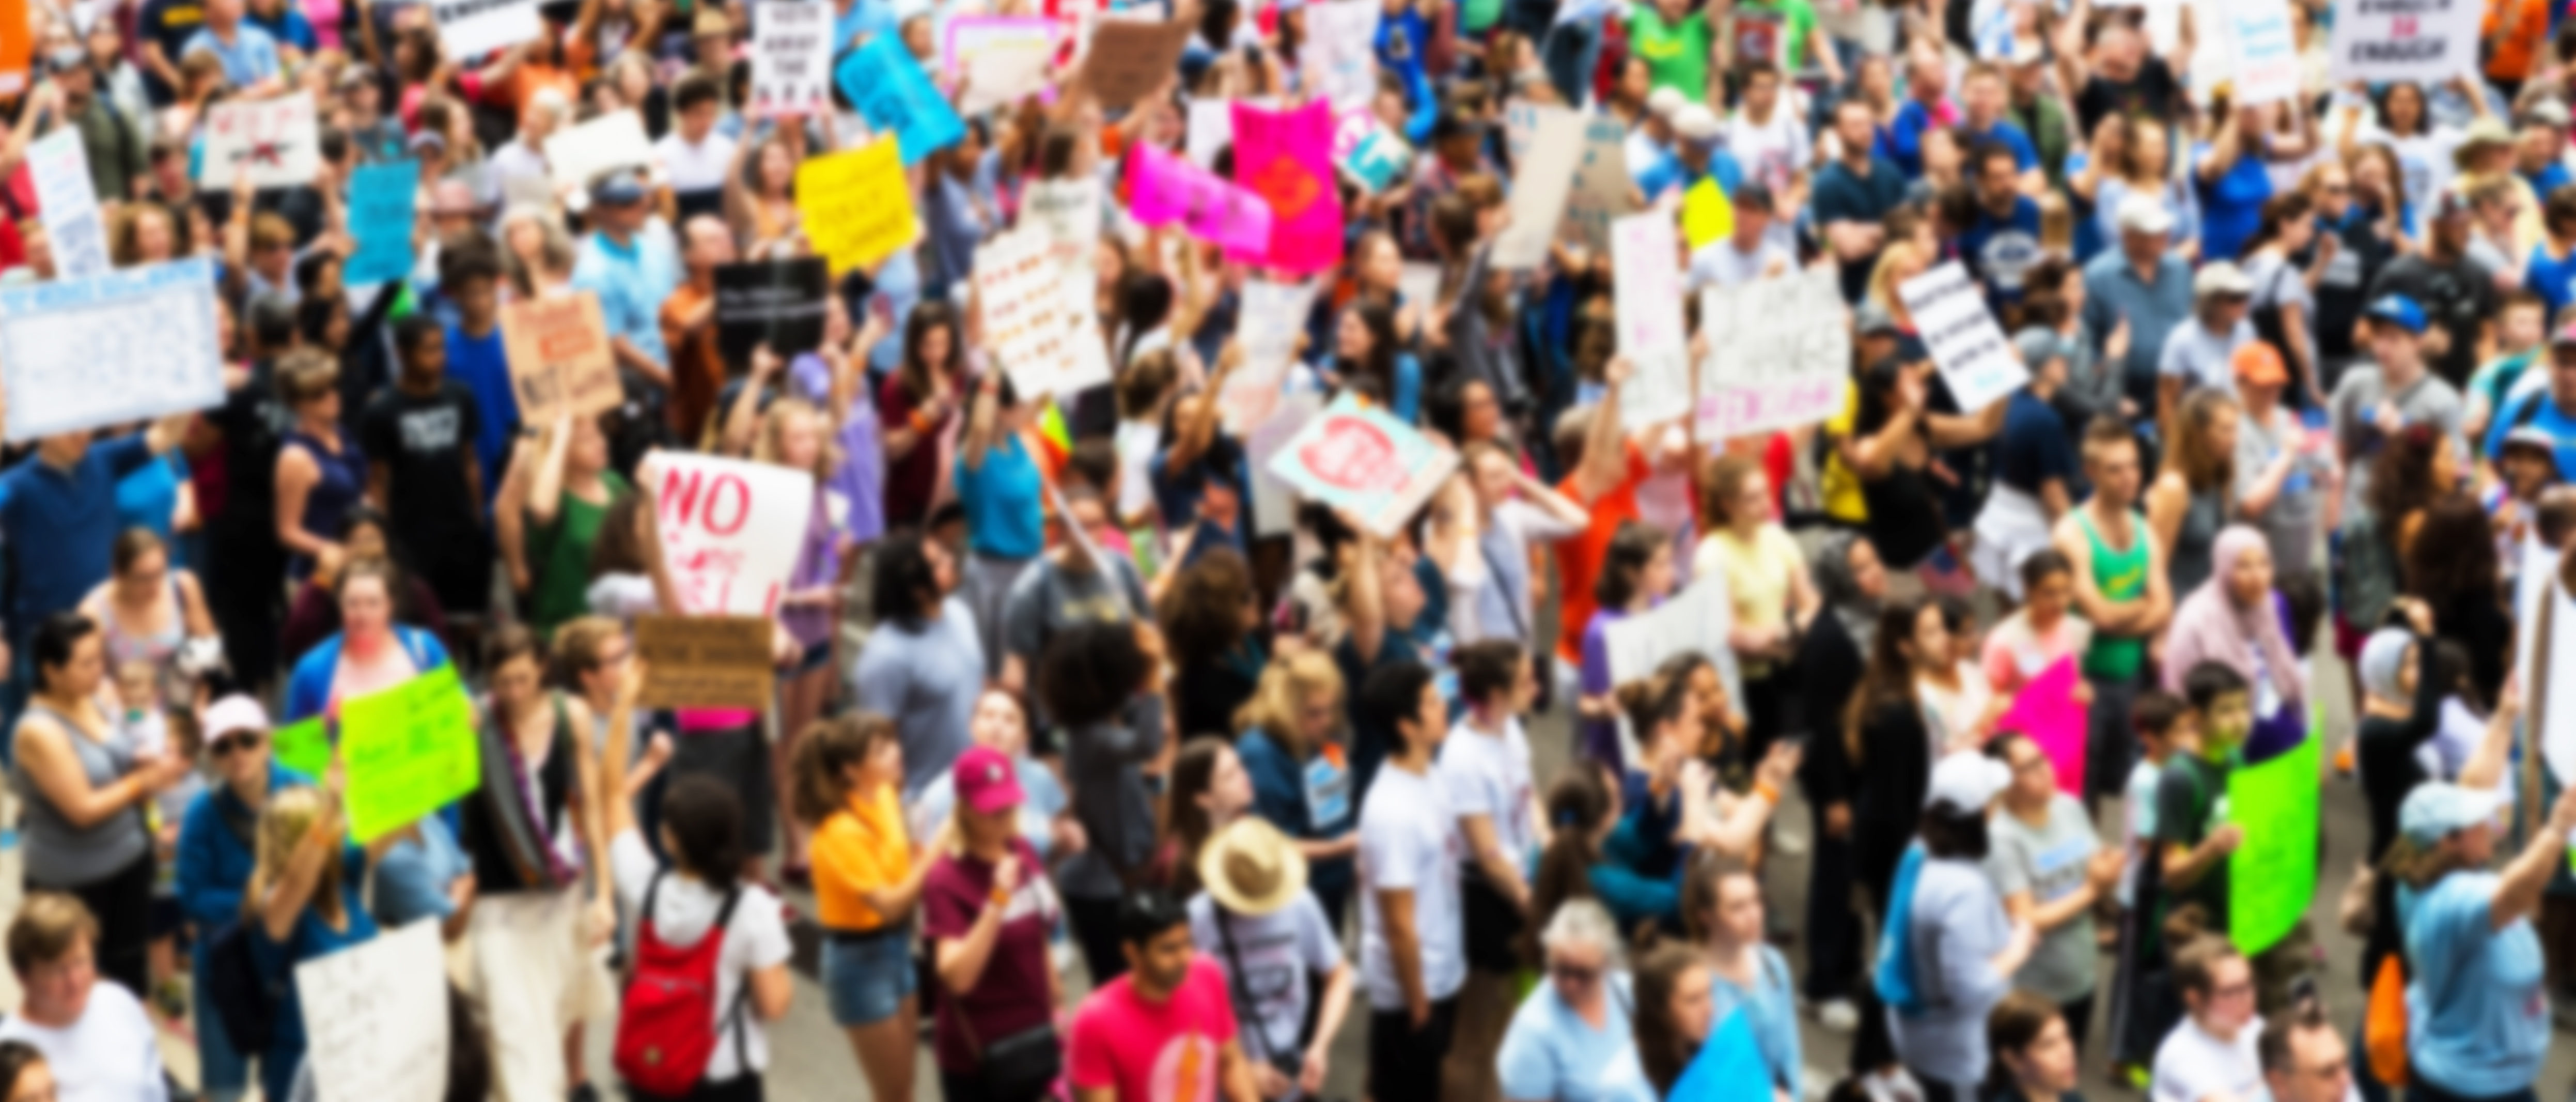 Huge crowd marching (Shutterstock/ michelmond)